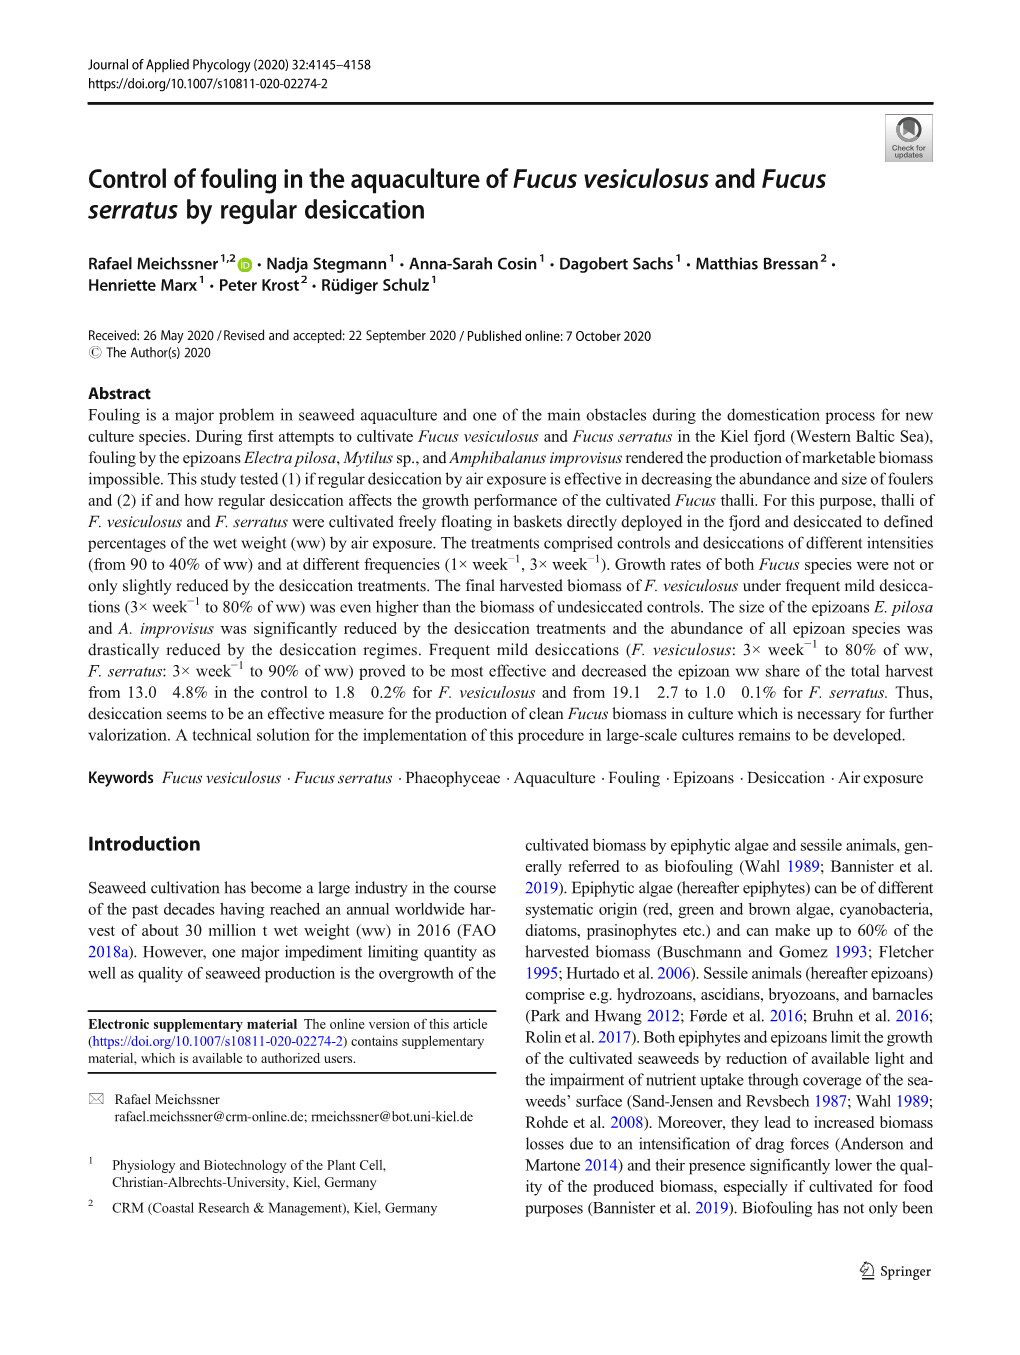 Control of Fouling in the Aquaculture of Fucus Vesiculosus and Fucus Serratus by Regular Desiccation